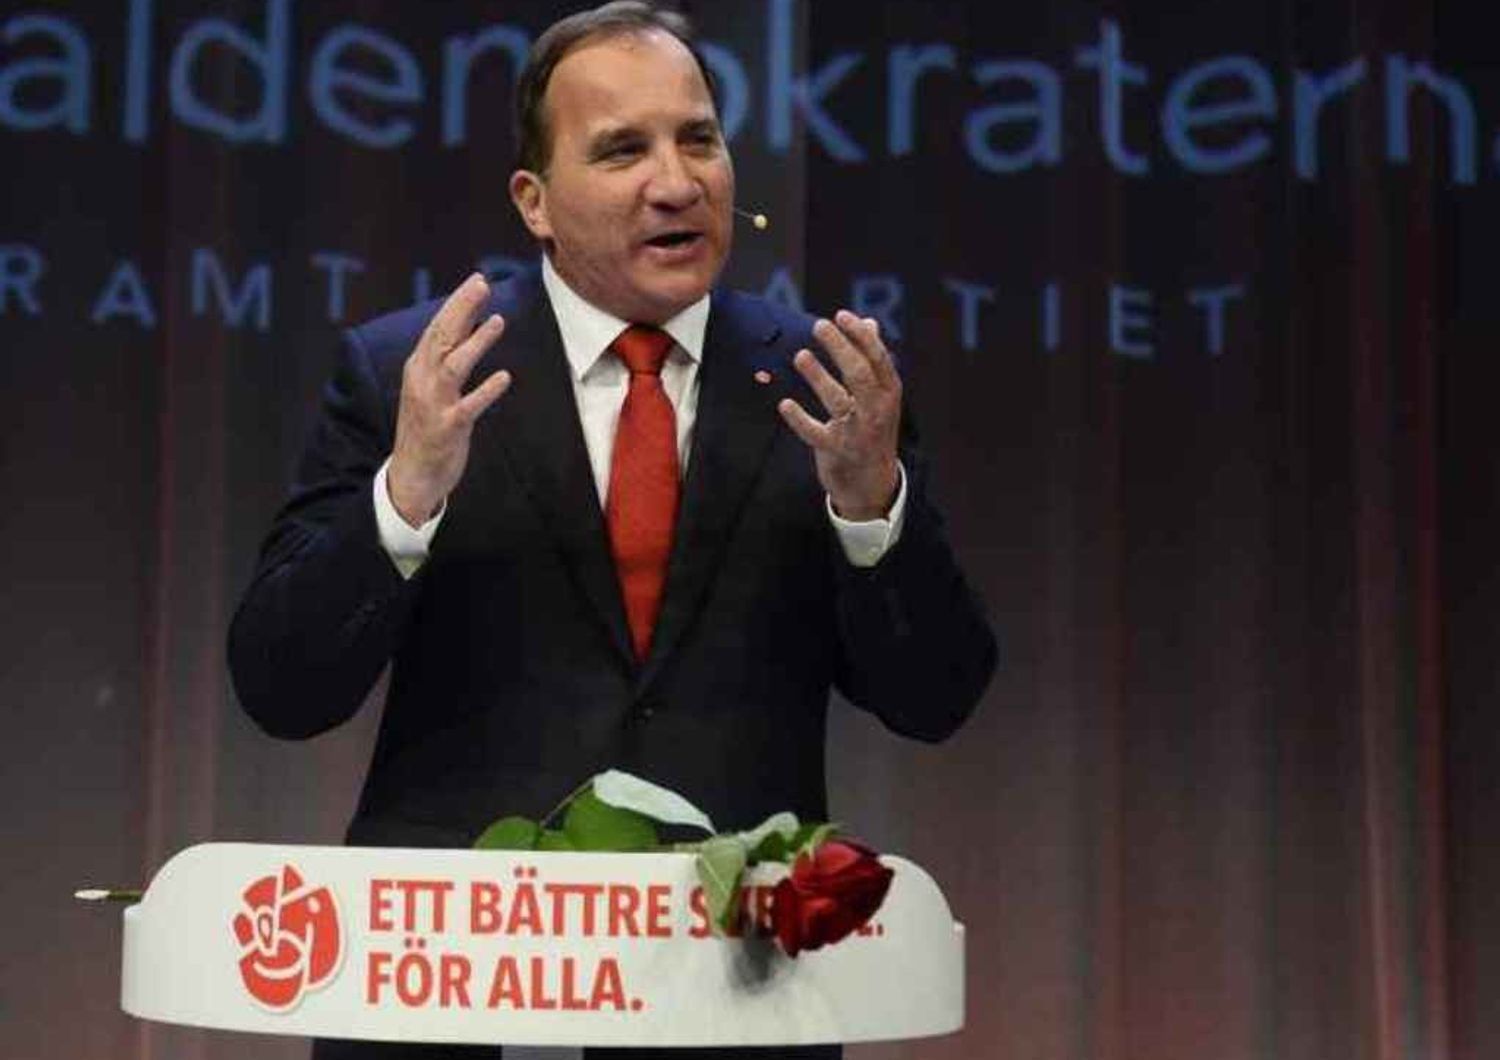 Svezia: mercati giu' dopo voto strada in salita per nuovo governo